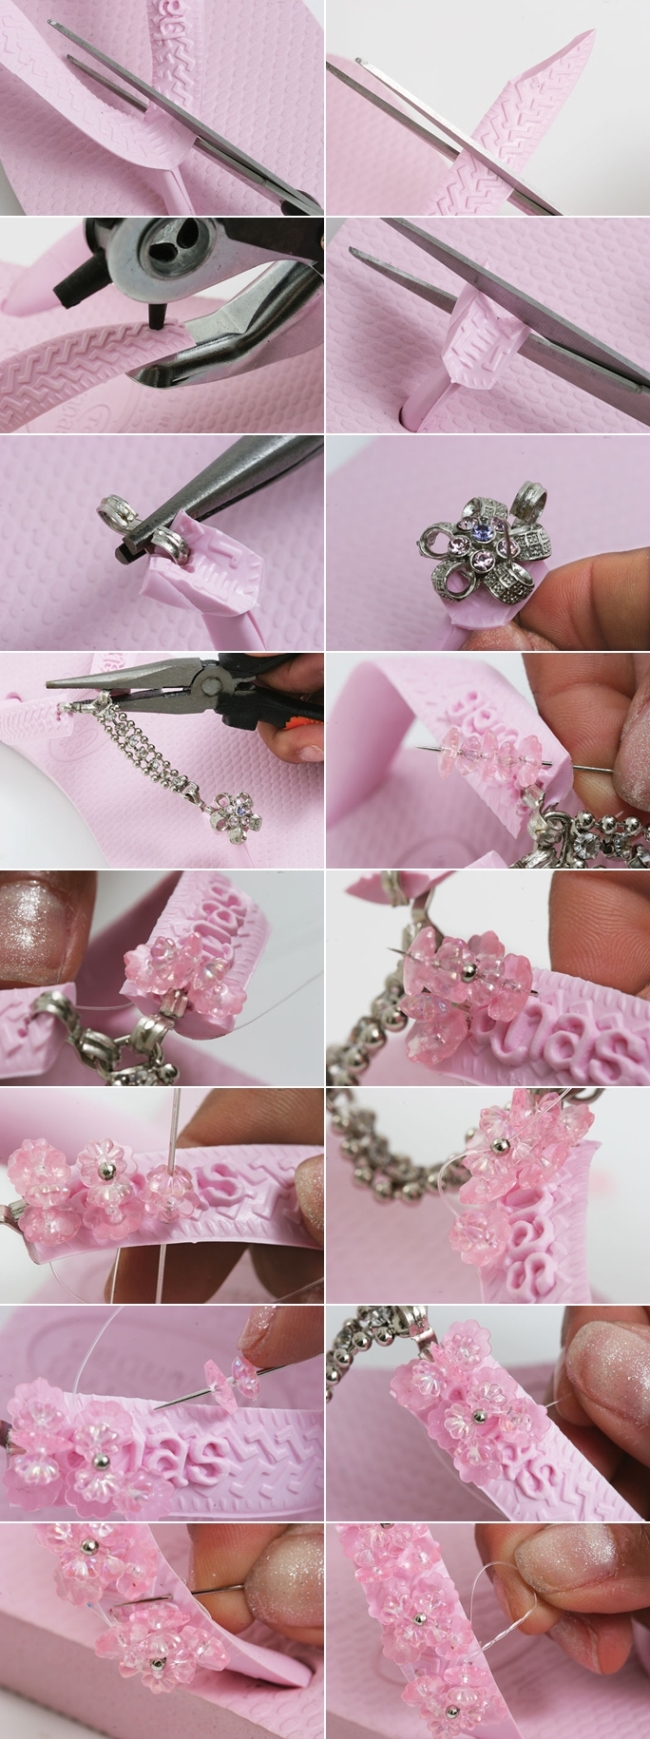 pink flip flops beads sewing embellishments tutorial